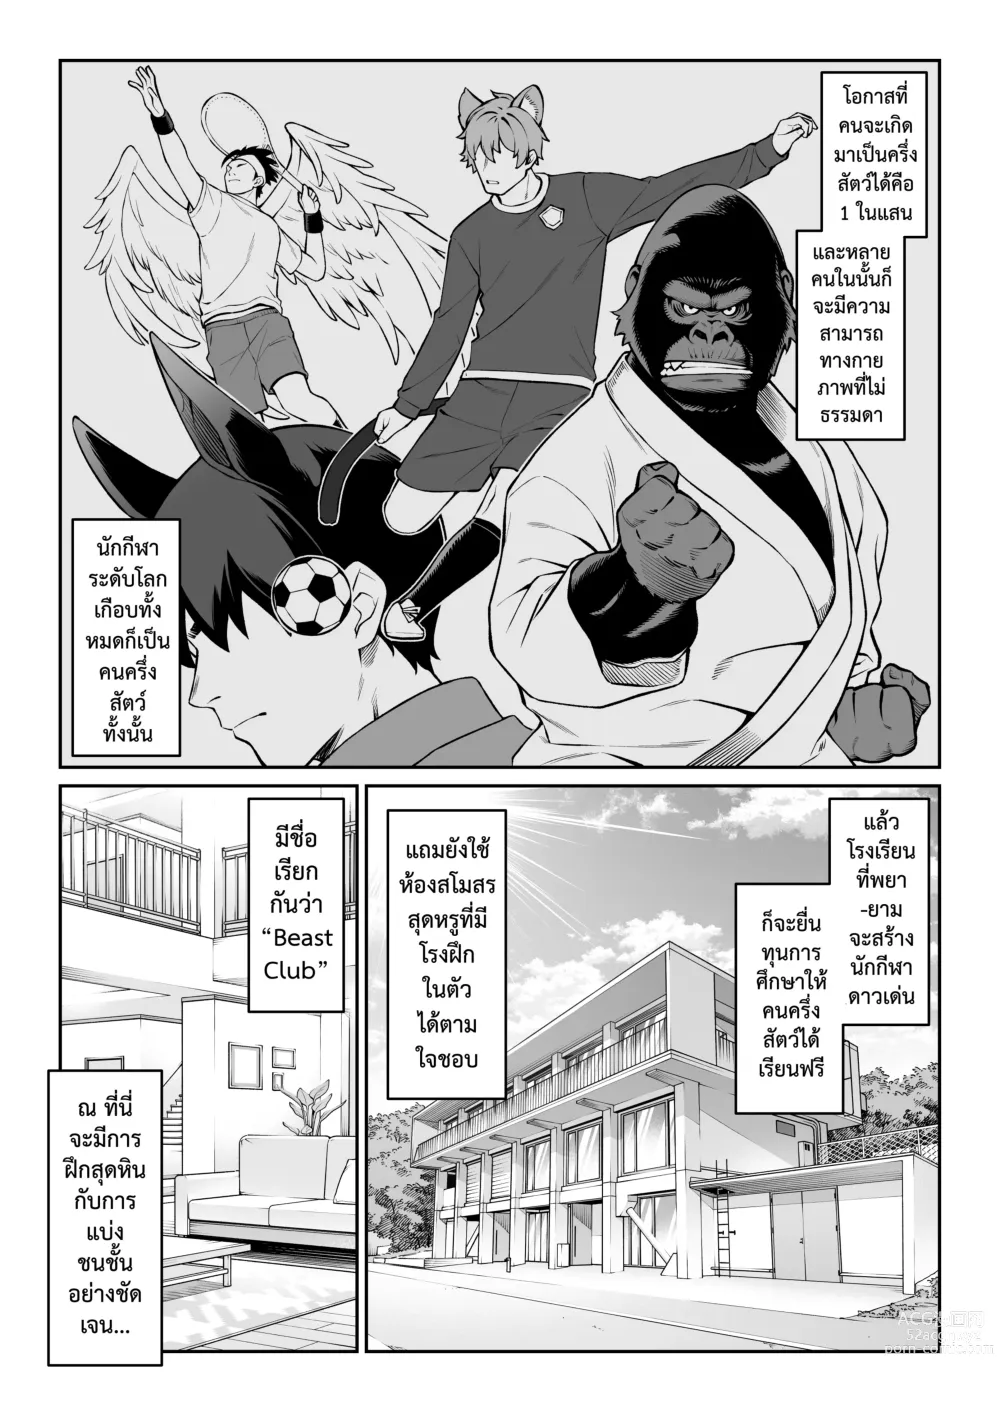 Page 6 of manga ชมรมสัตว์กินเนื้อ